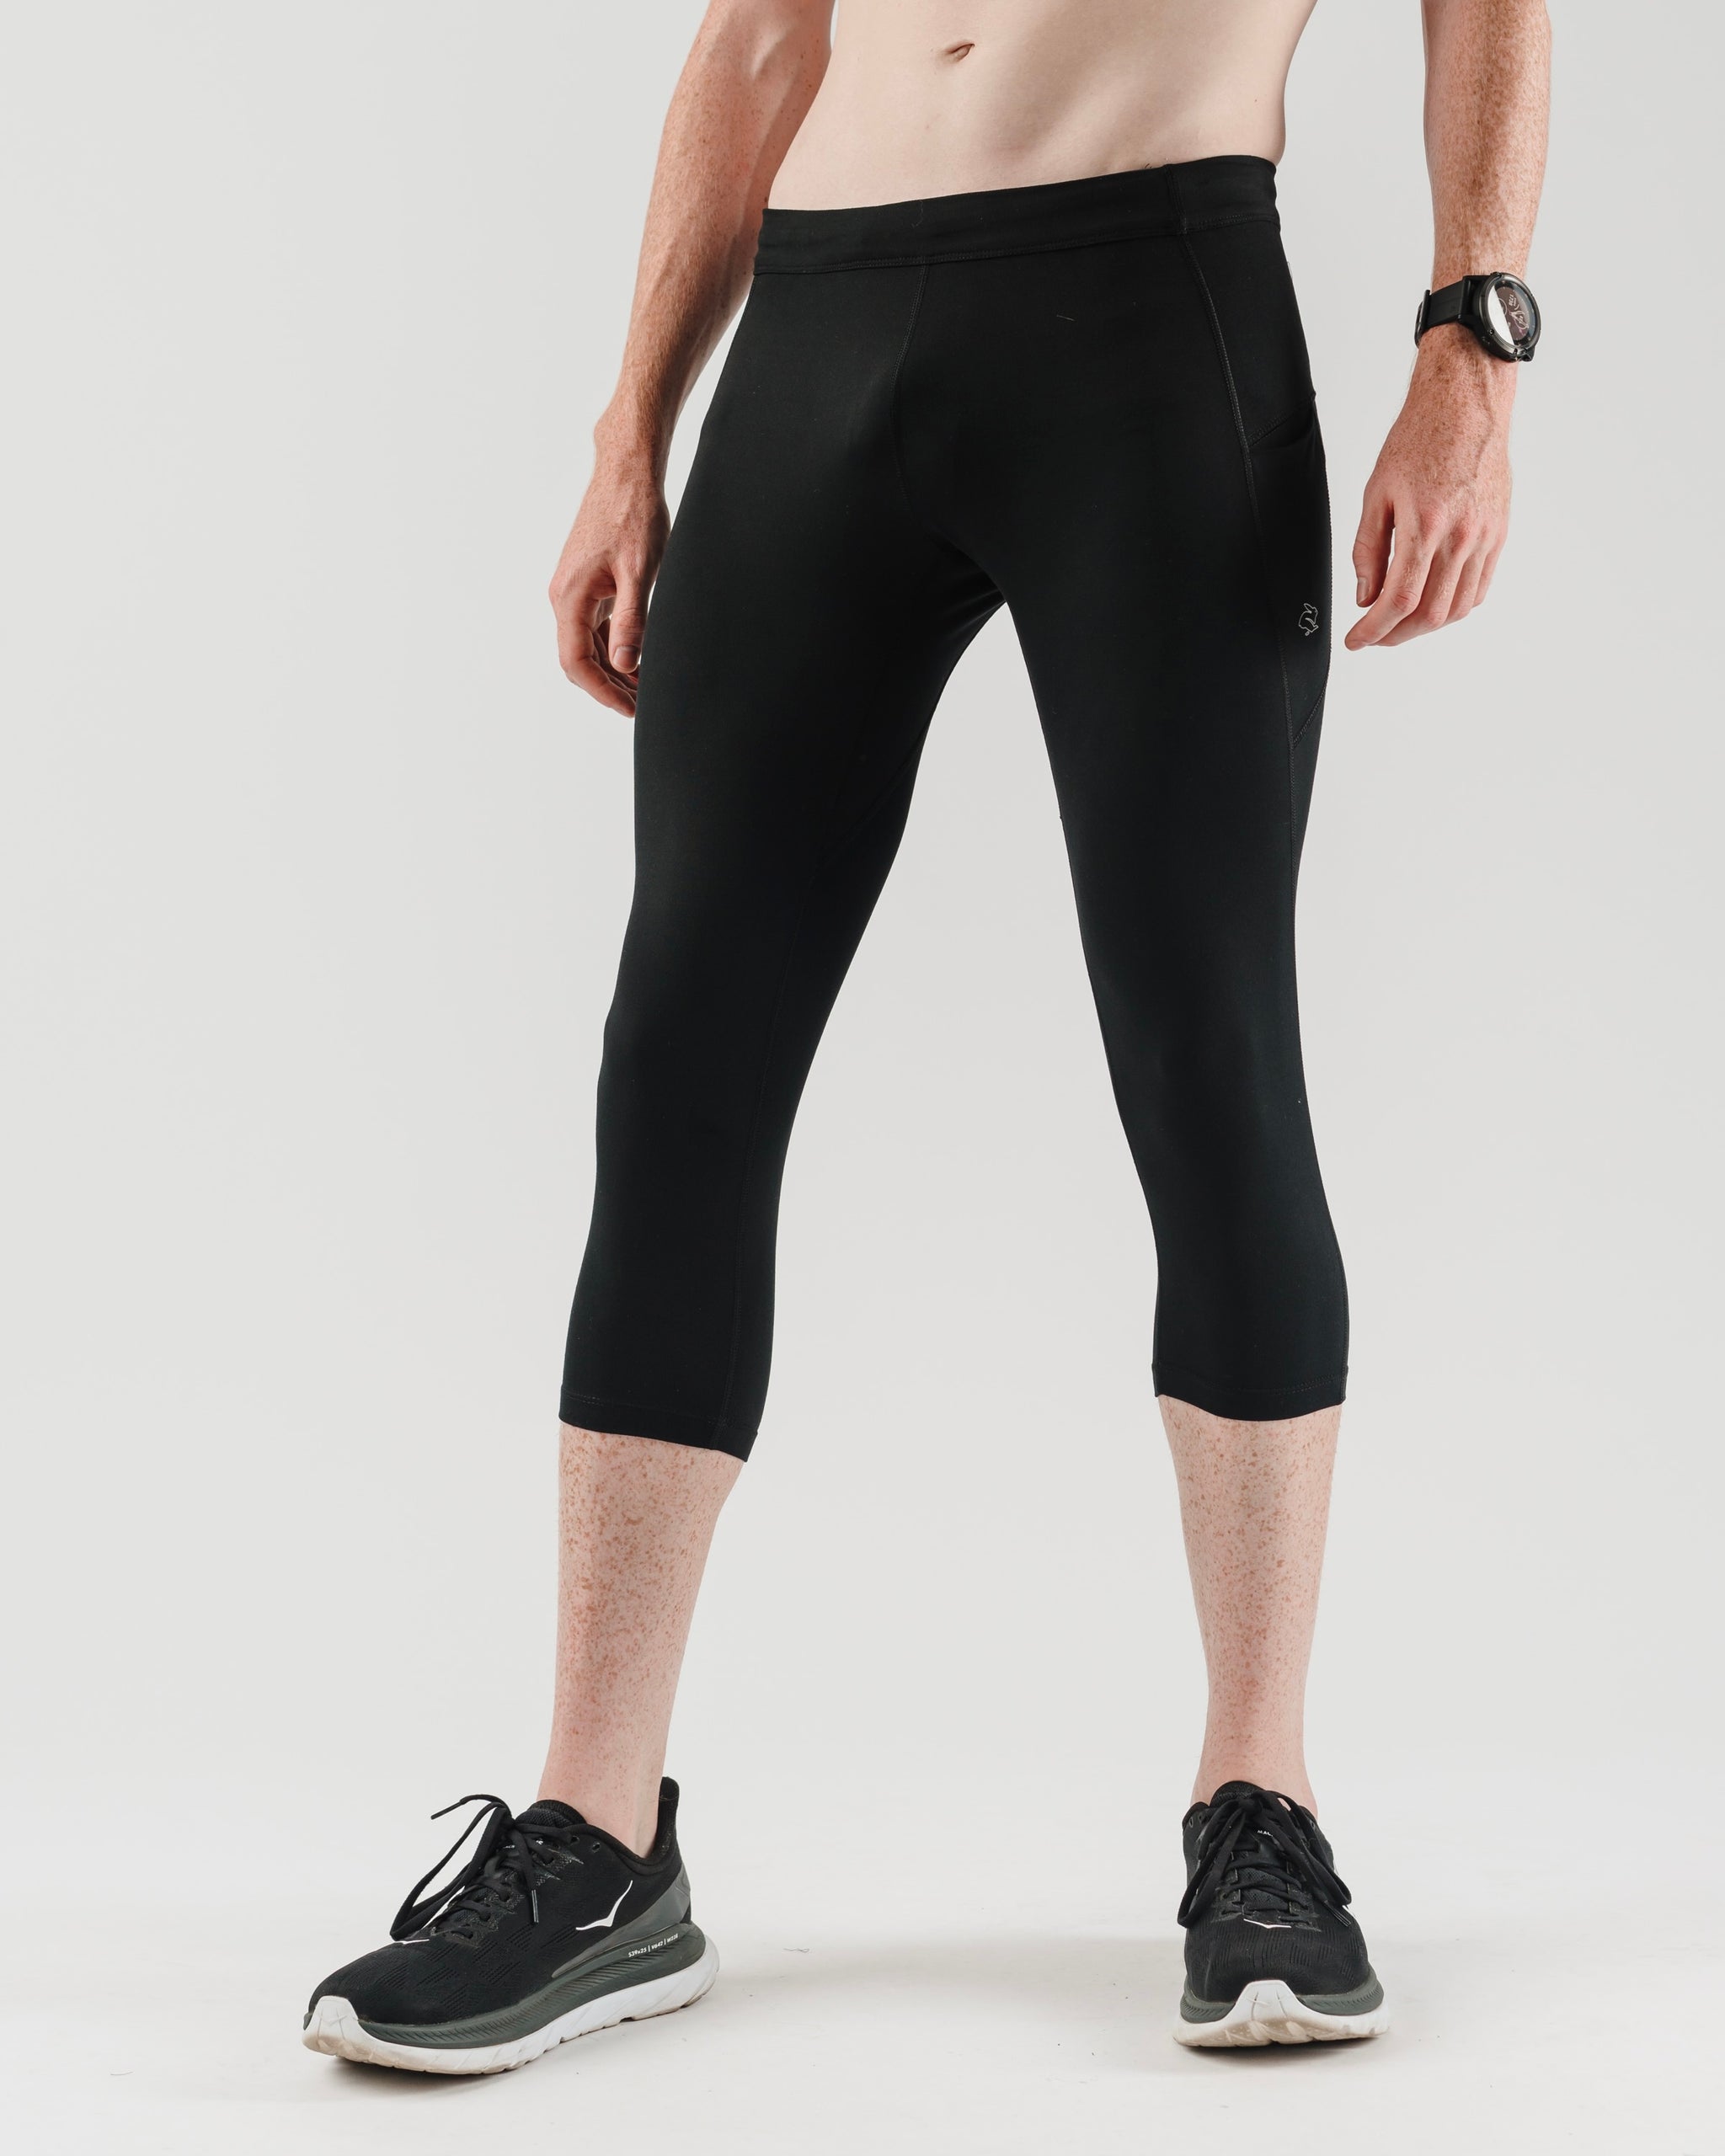 Men's Puma Sports capri pants, size XL (Black)